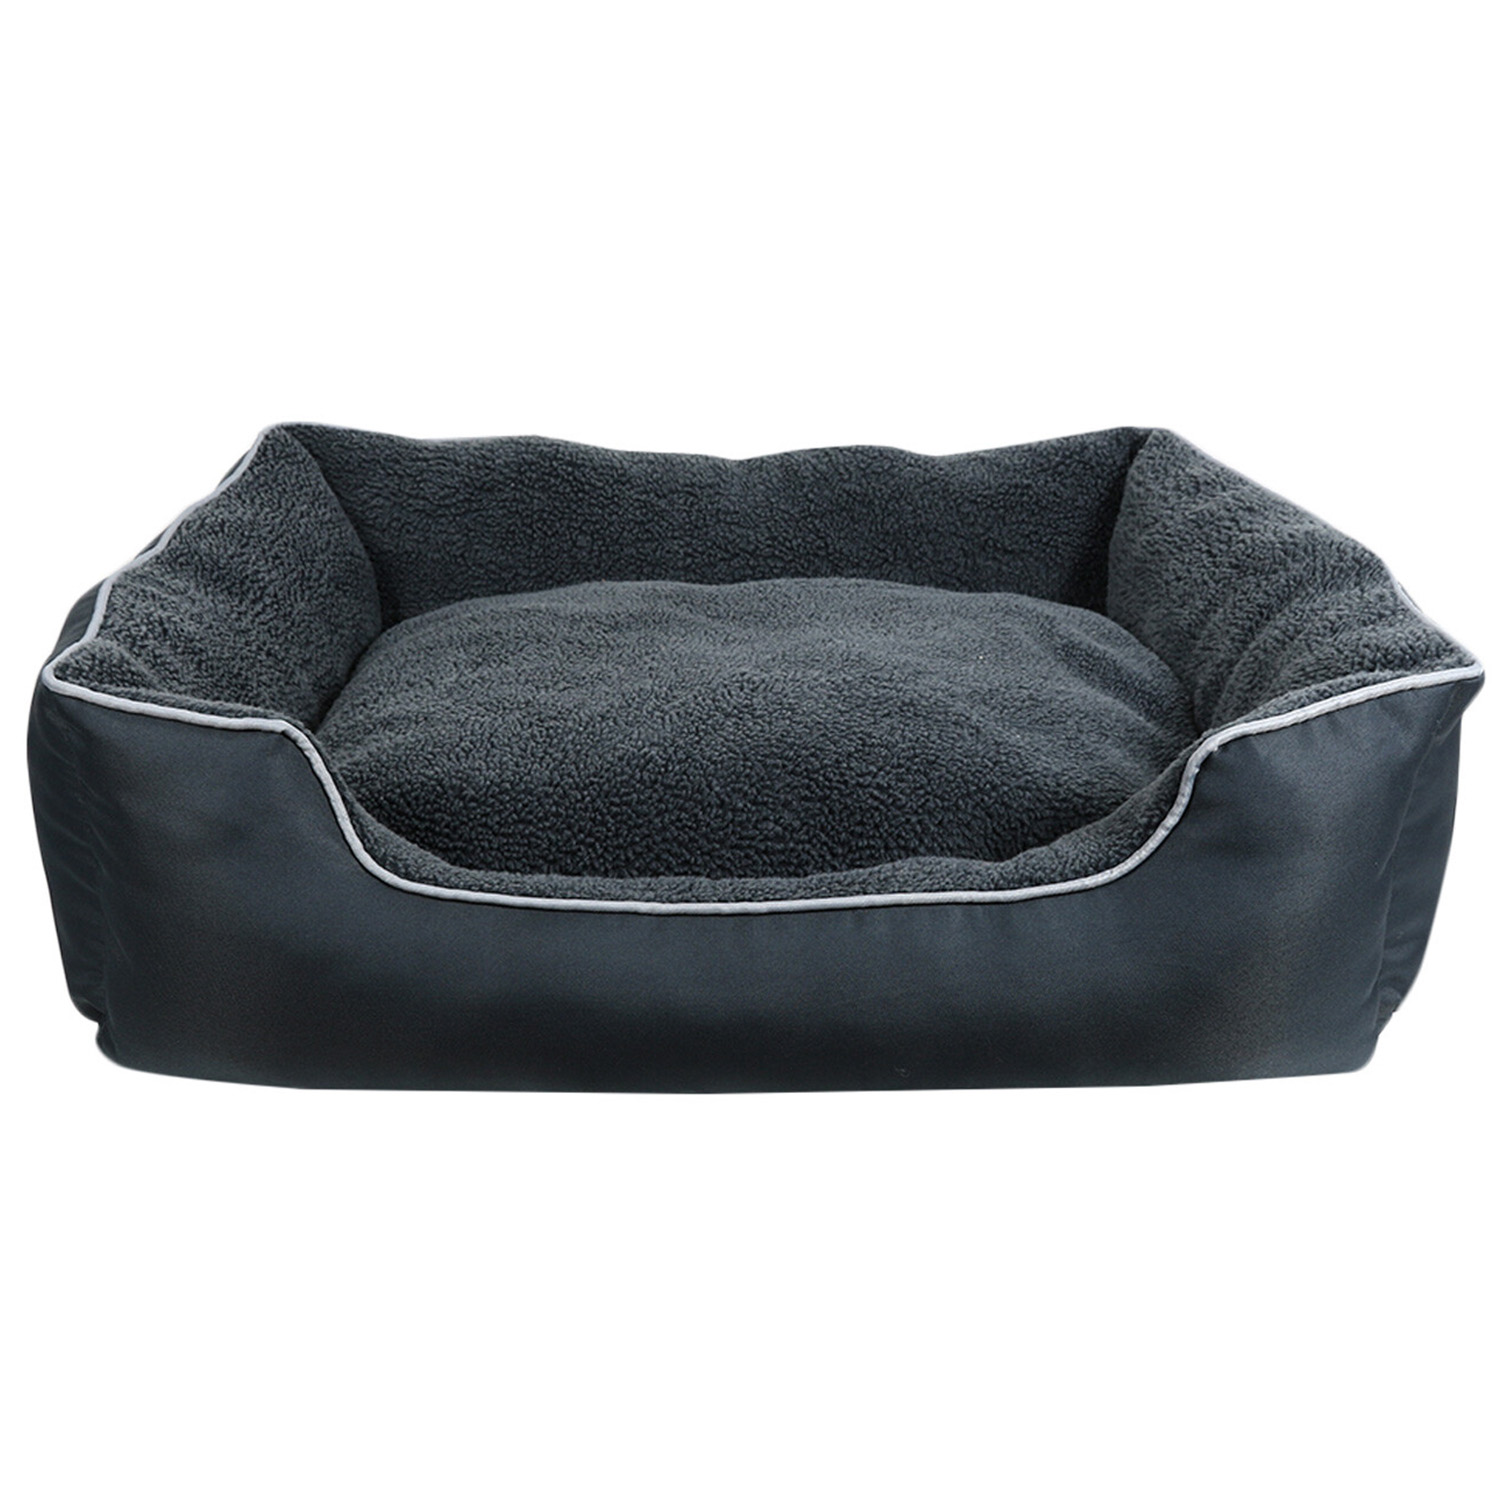 Clever Paws Smokey Grey RPET Rectangular Medium Pet Bed Image 1